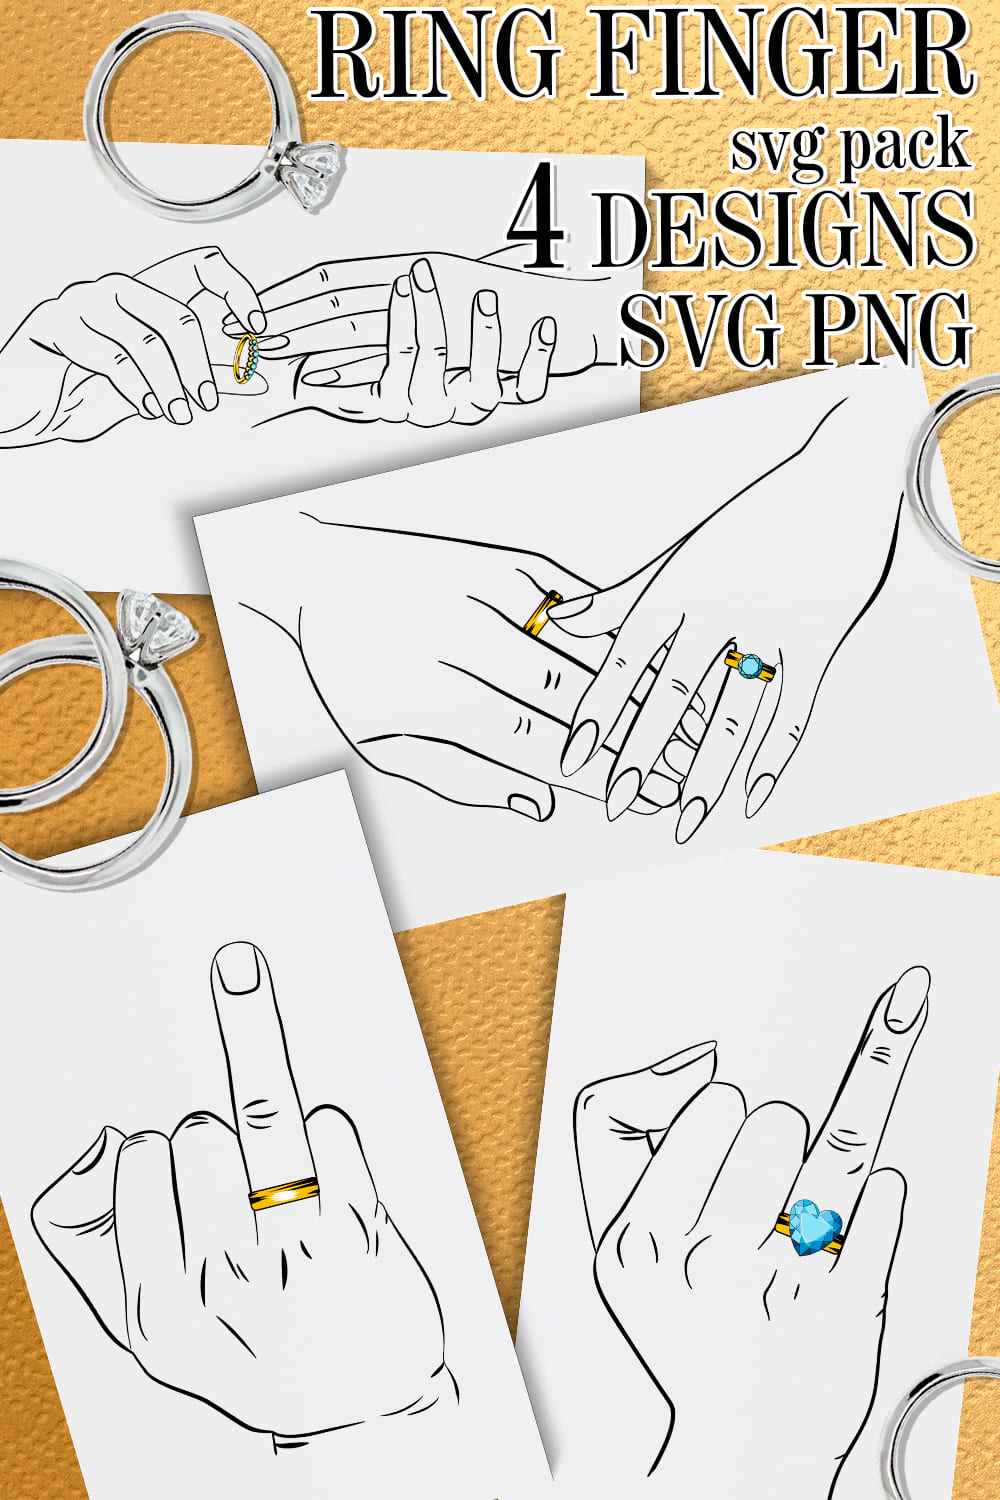 Ring Finger SVG - pinterest image preview.